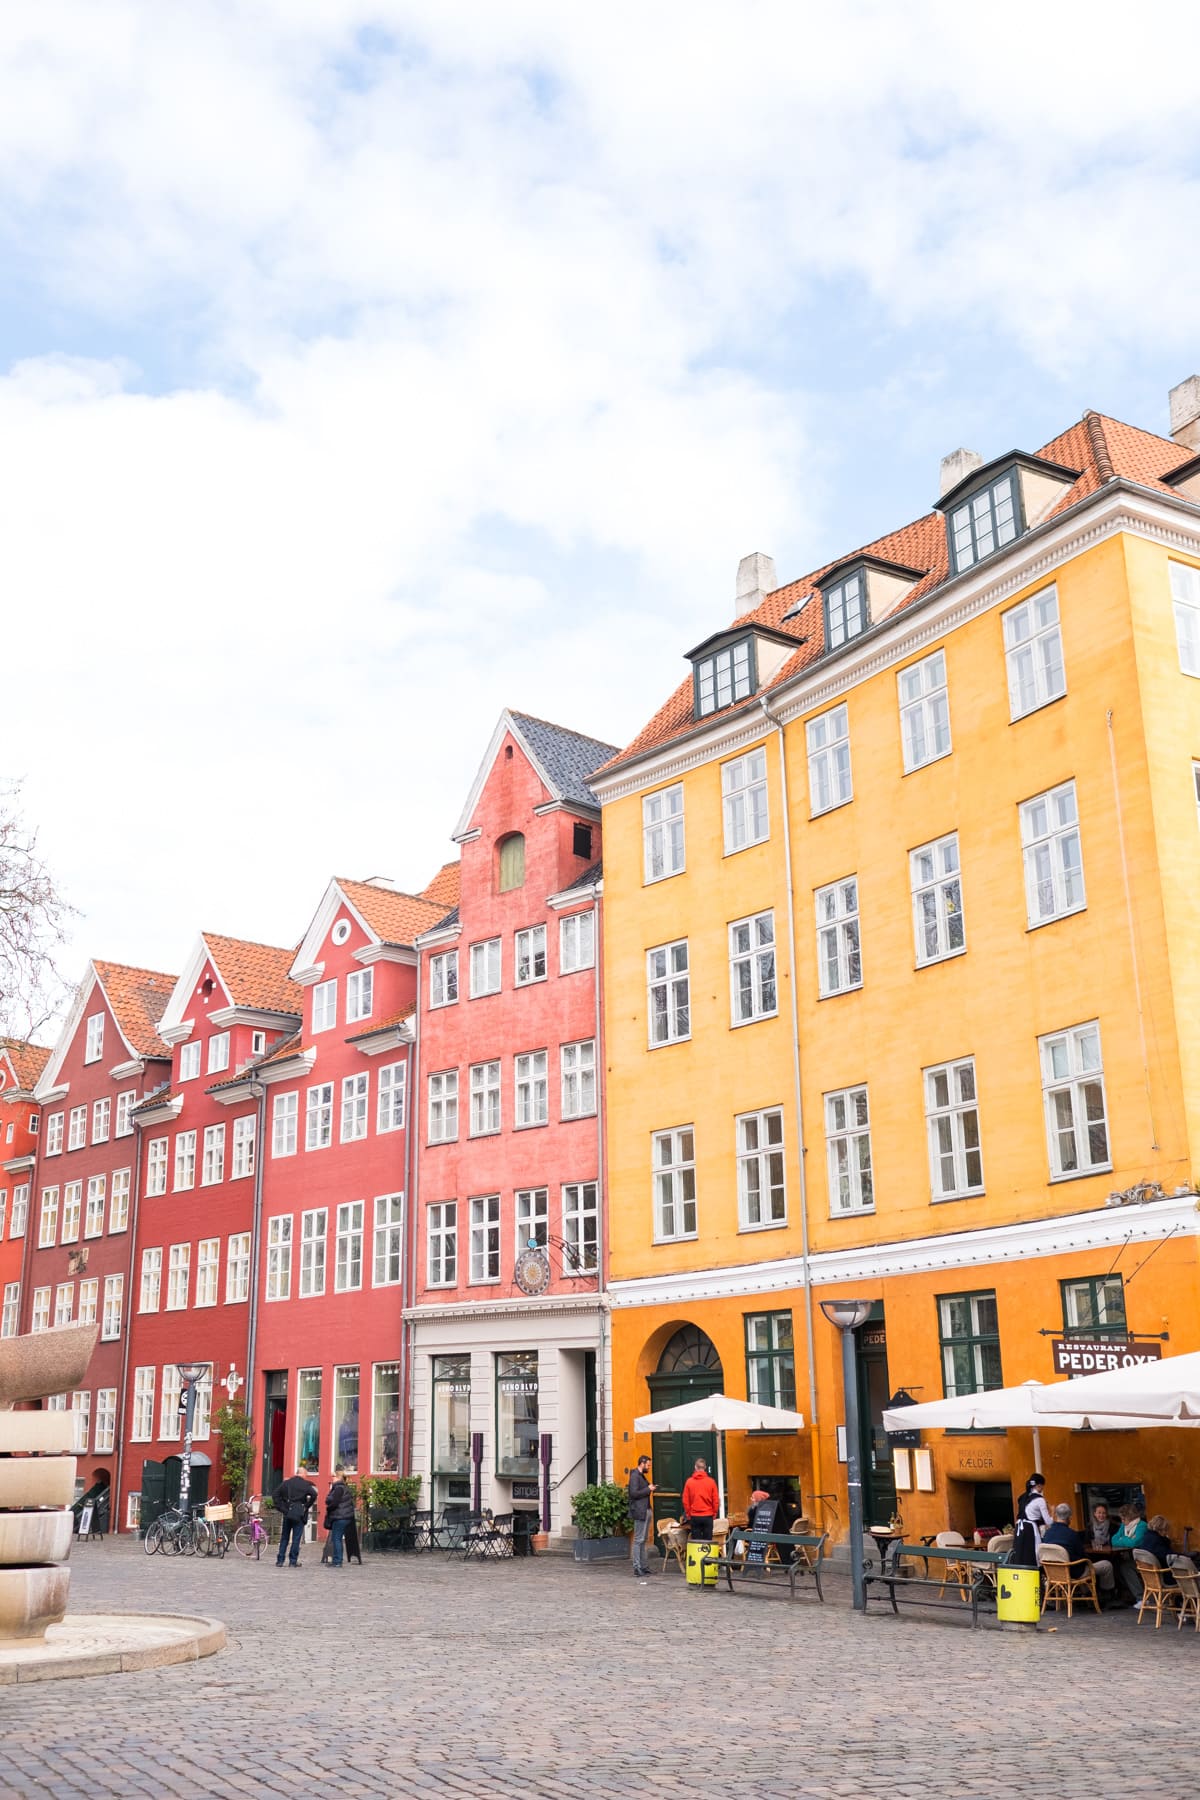 Our Scandinavian Travels: Copenhagen, Oslo, + Berlin!